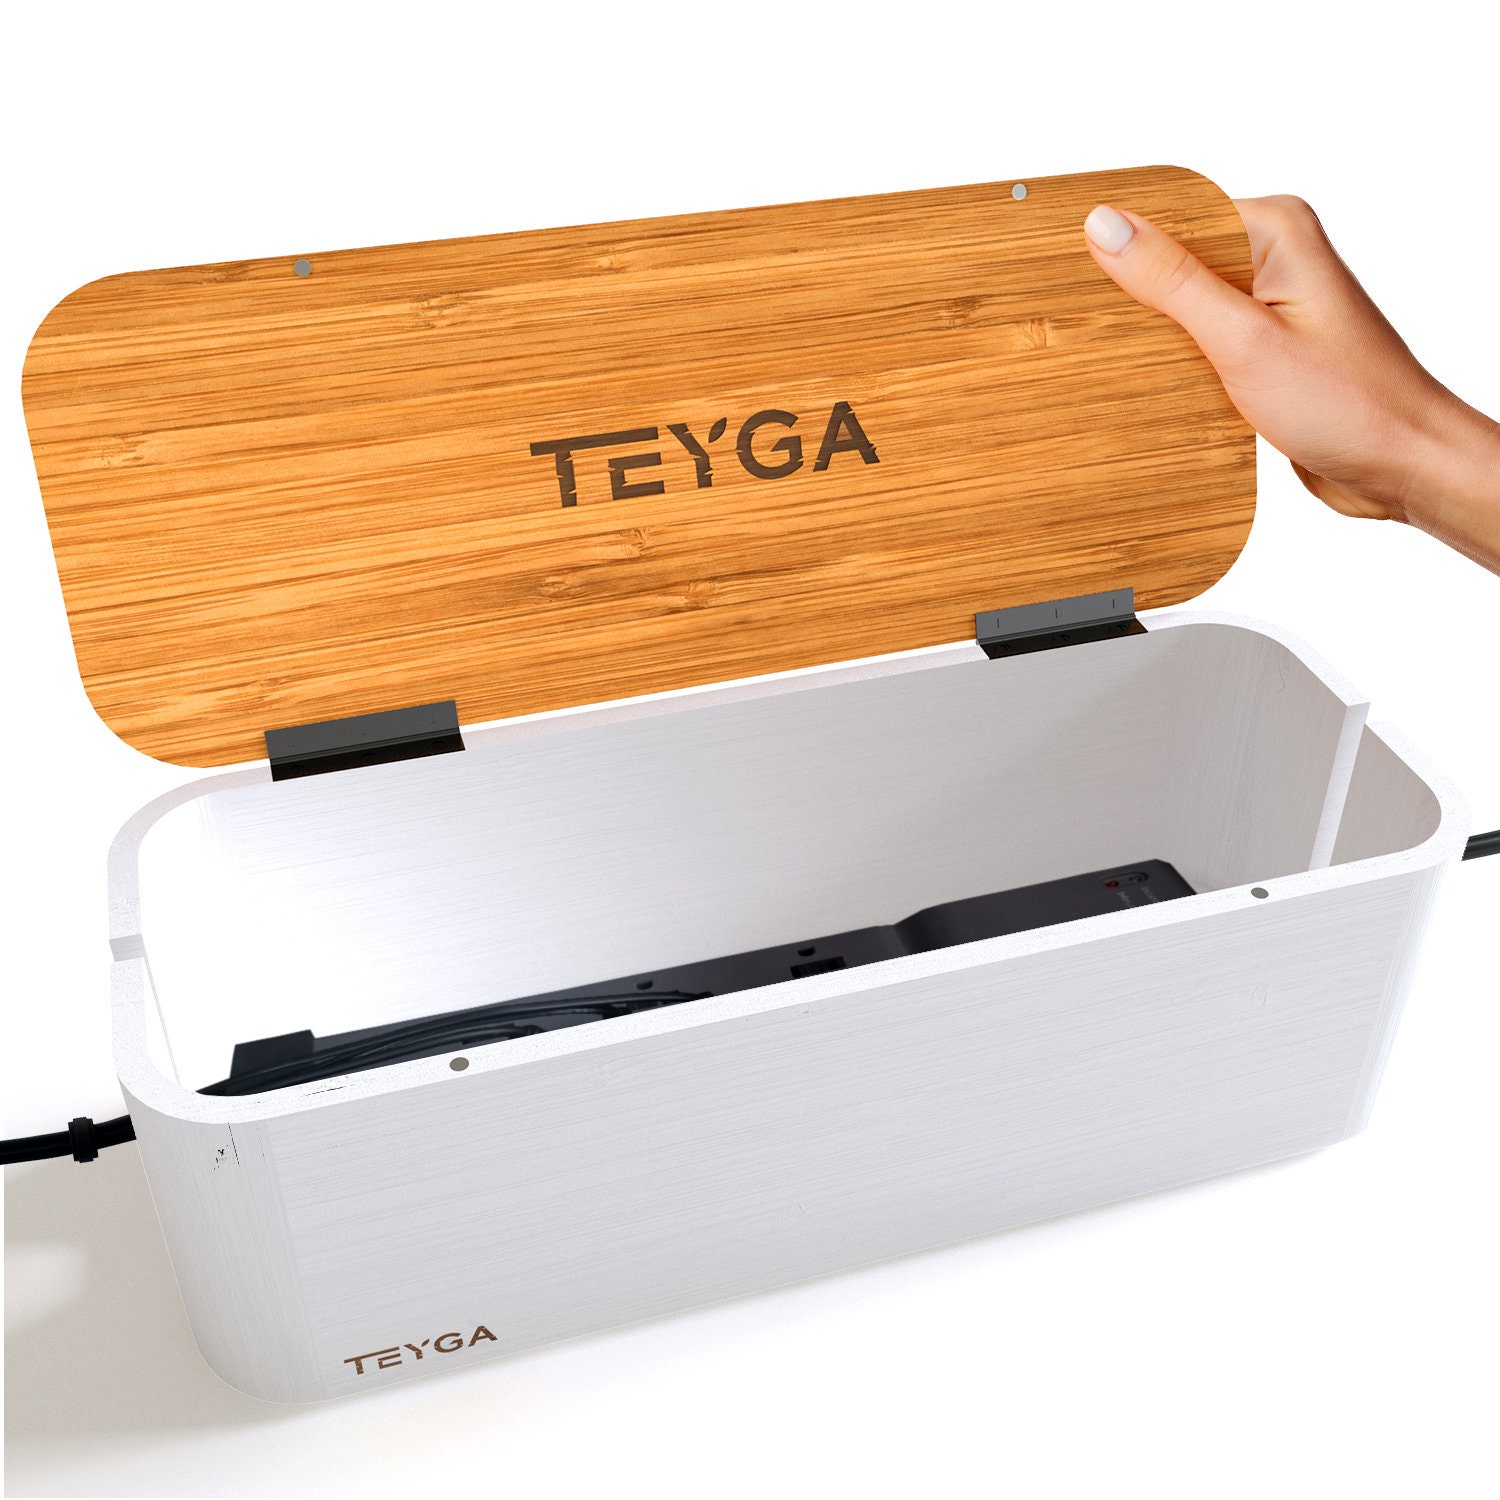 TEYGA Craftly - Premium Indestructible Bamboo Art Supply Organizer